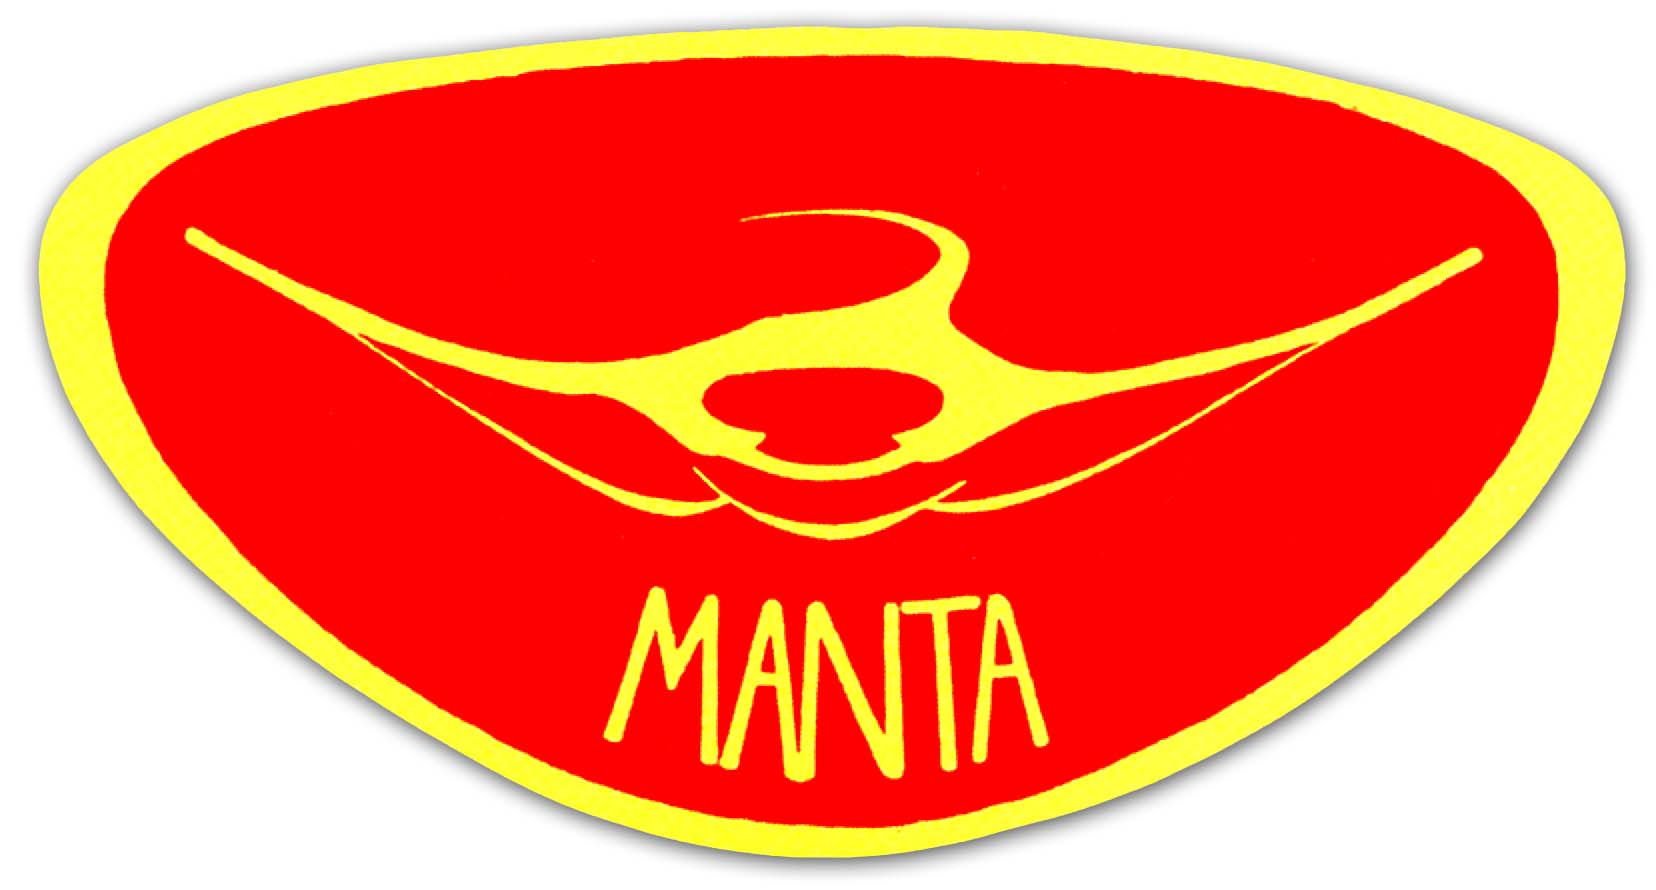 1978. Manta Cars (Costa Mesa, California)